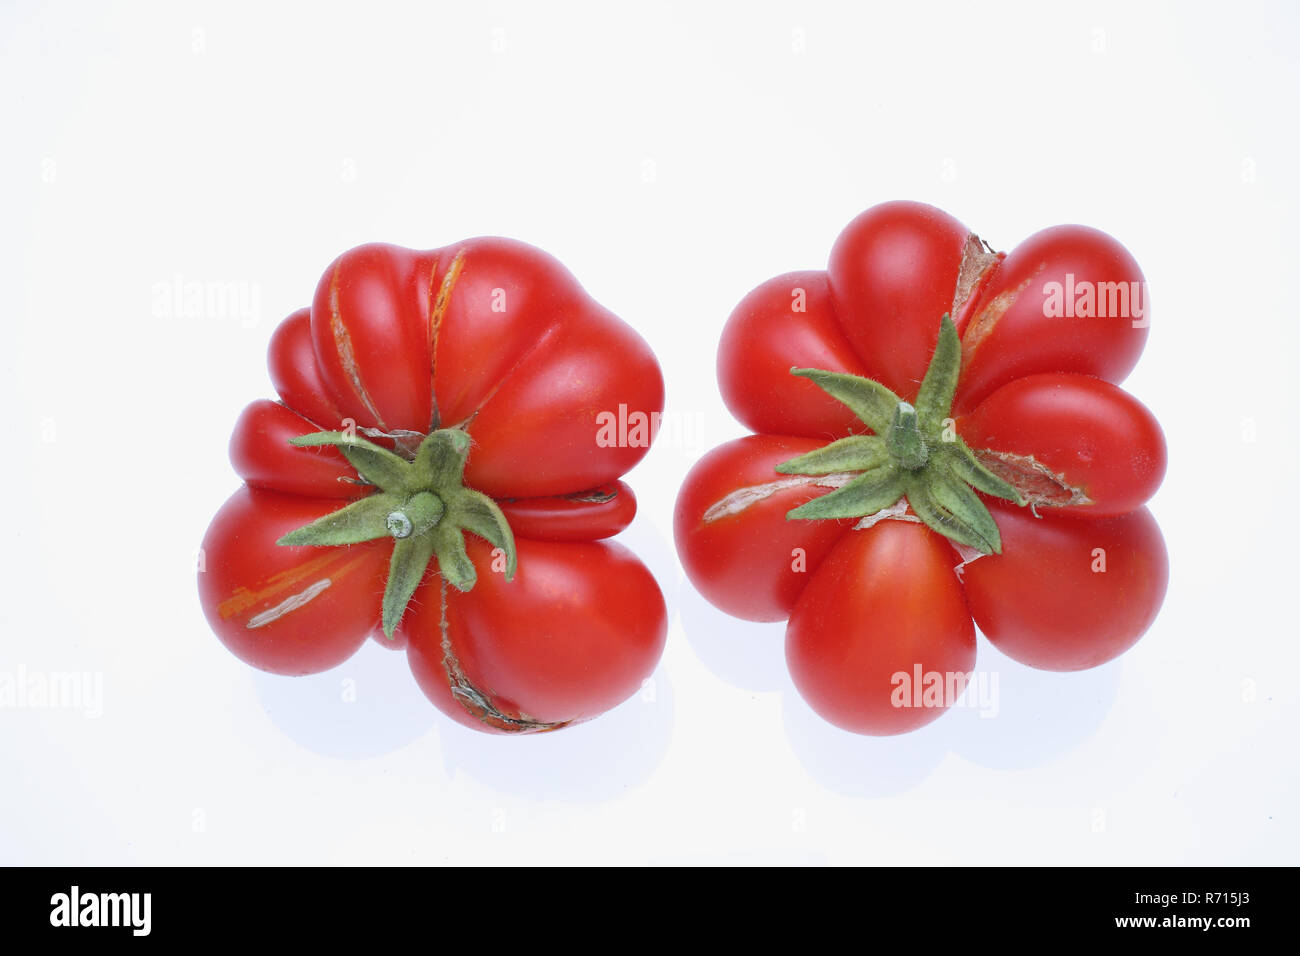 Tomaten, Reisetomate oder Reisende Tomatensorte Stockfoto